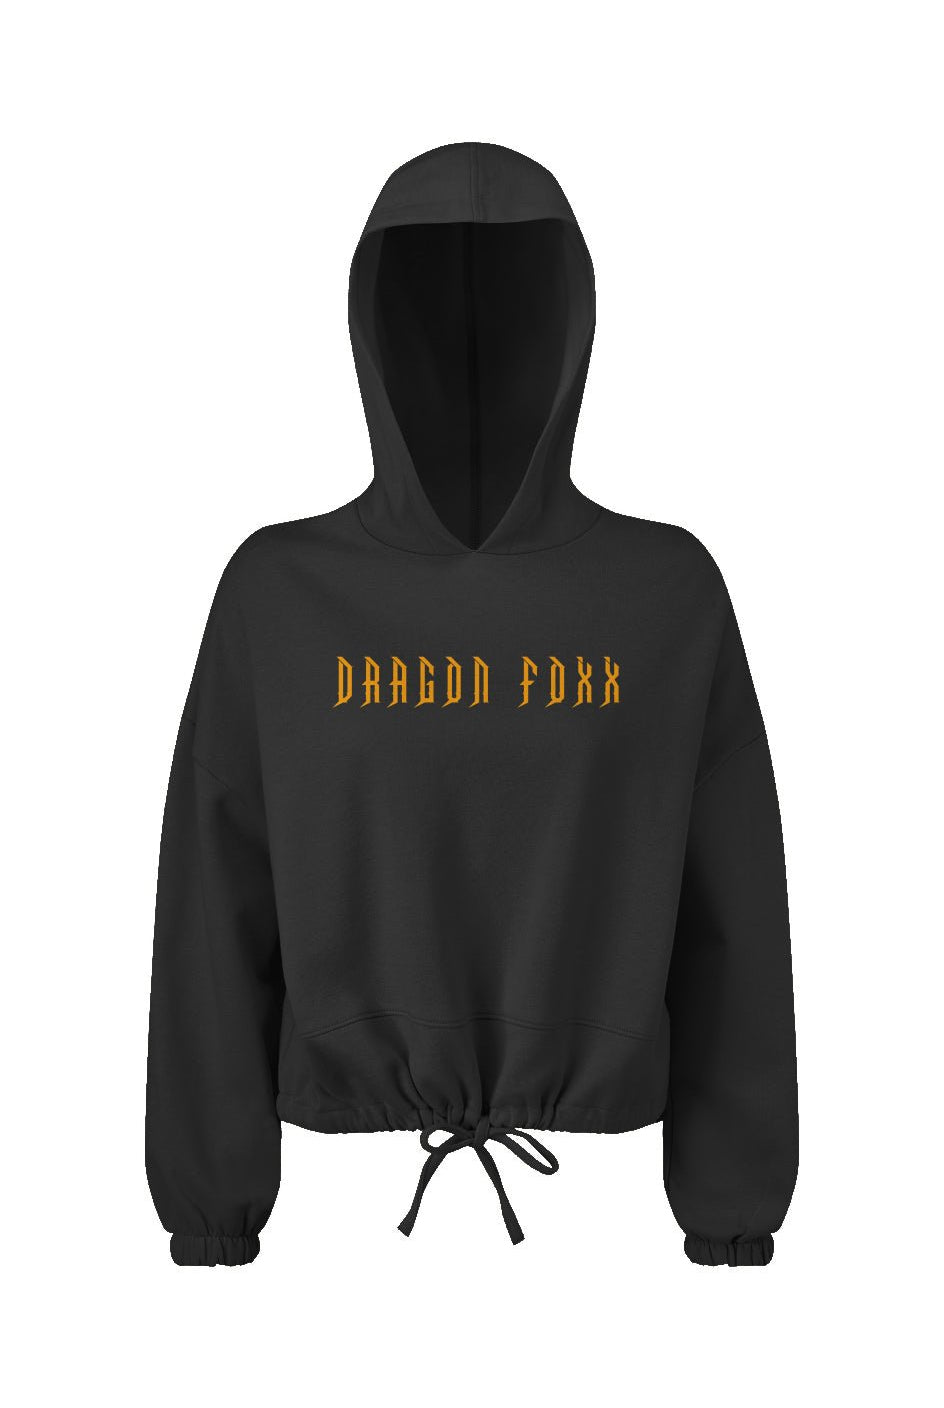 Dragon Foxx™ Women's Cropped Oversize Hooded Sweatshirt - Cropped Oversize Hooded Sweatshirt - Apliiq - Dragon Foxx™ Women's Cropped Oversize Hooded Sweatshirt - APQ-4430228S69A1 - S/M - Black - Black Cropped Oversize Hooded Sweatshirt - Cropped Oversize Hooded Sweatshirt - Dragon Foxx™